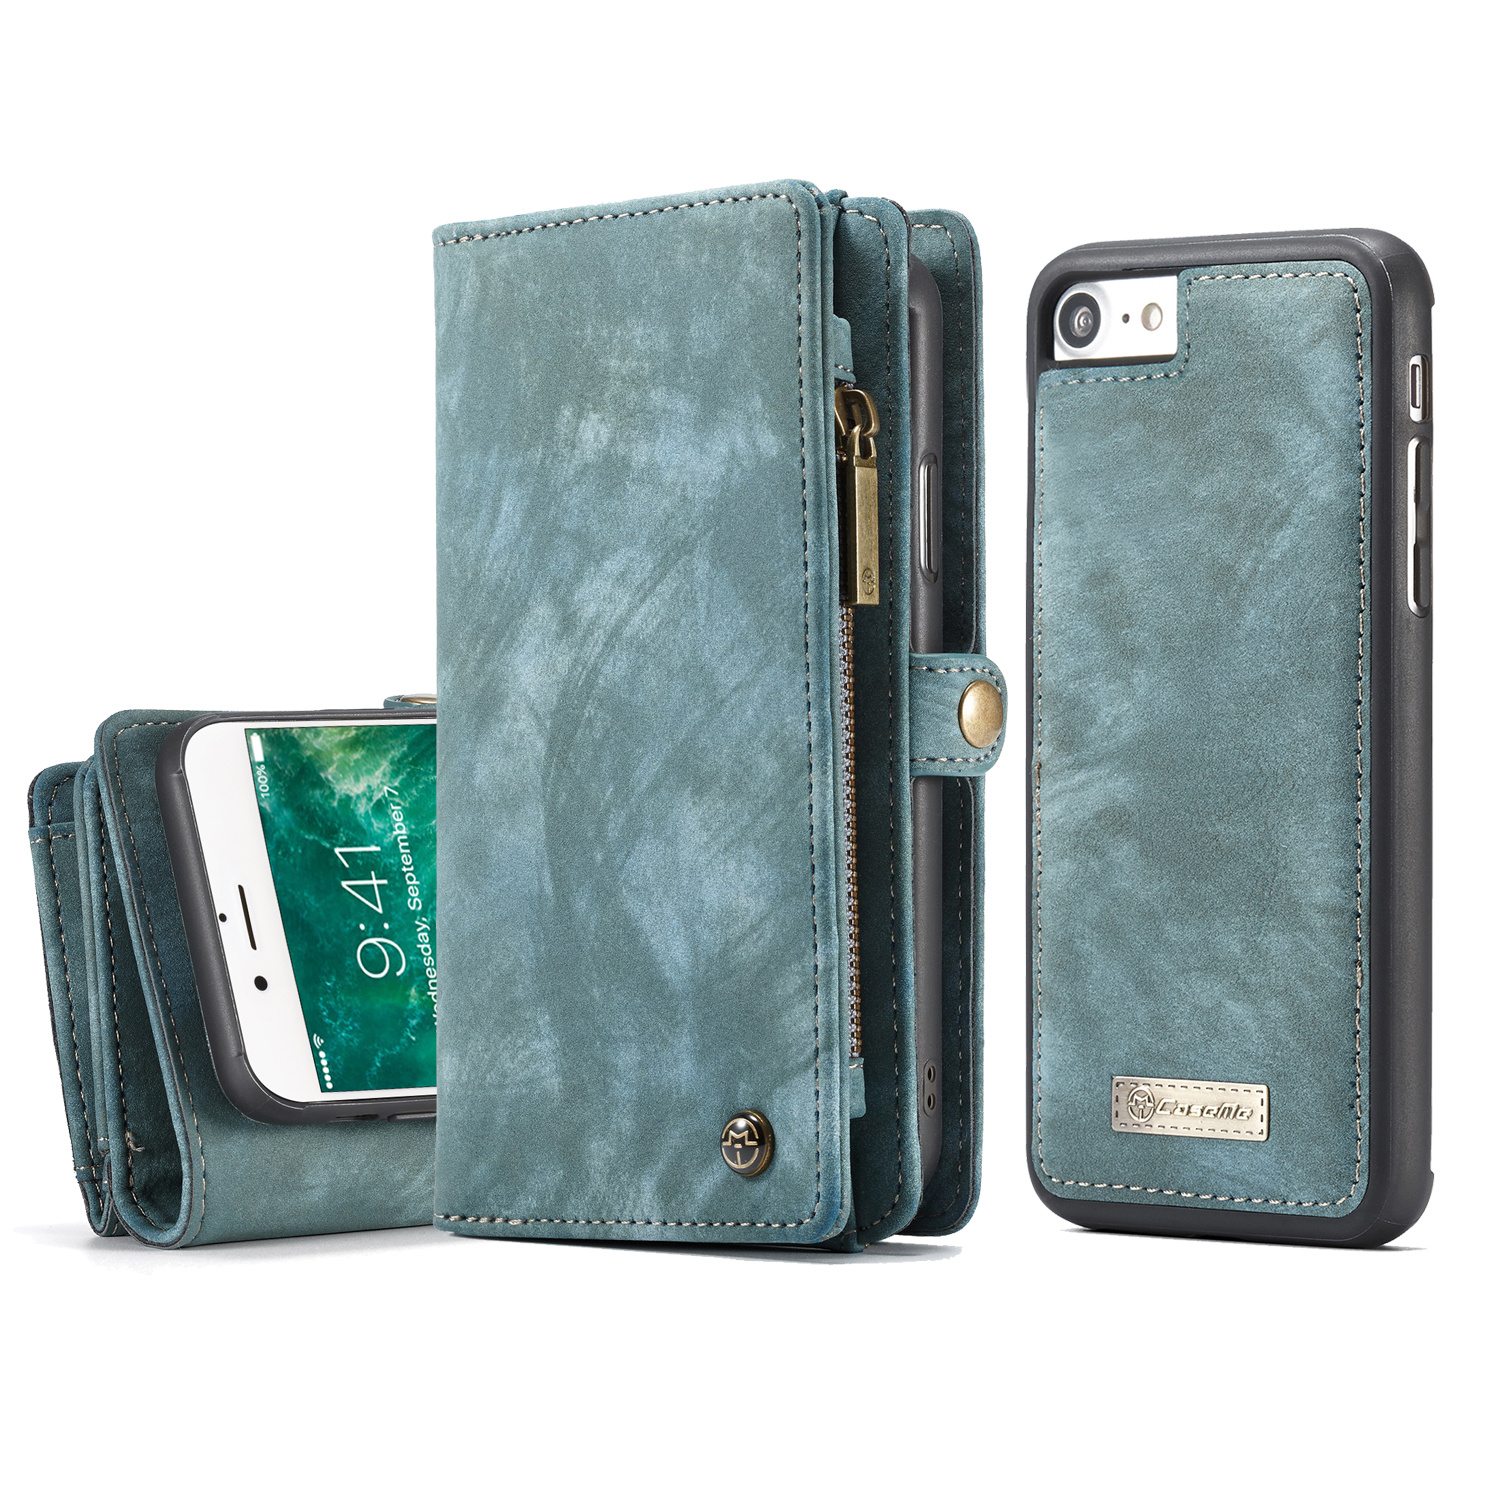 schermutseling angst ventilatie Caseme vintage 2 in 1 portemonnee hoes iPhone 7 / 8 / SE 2020 - Blauw